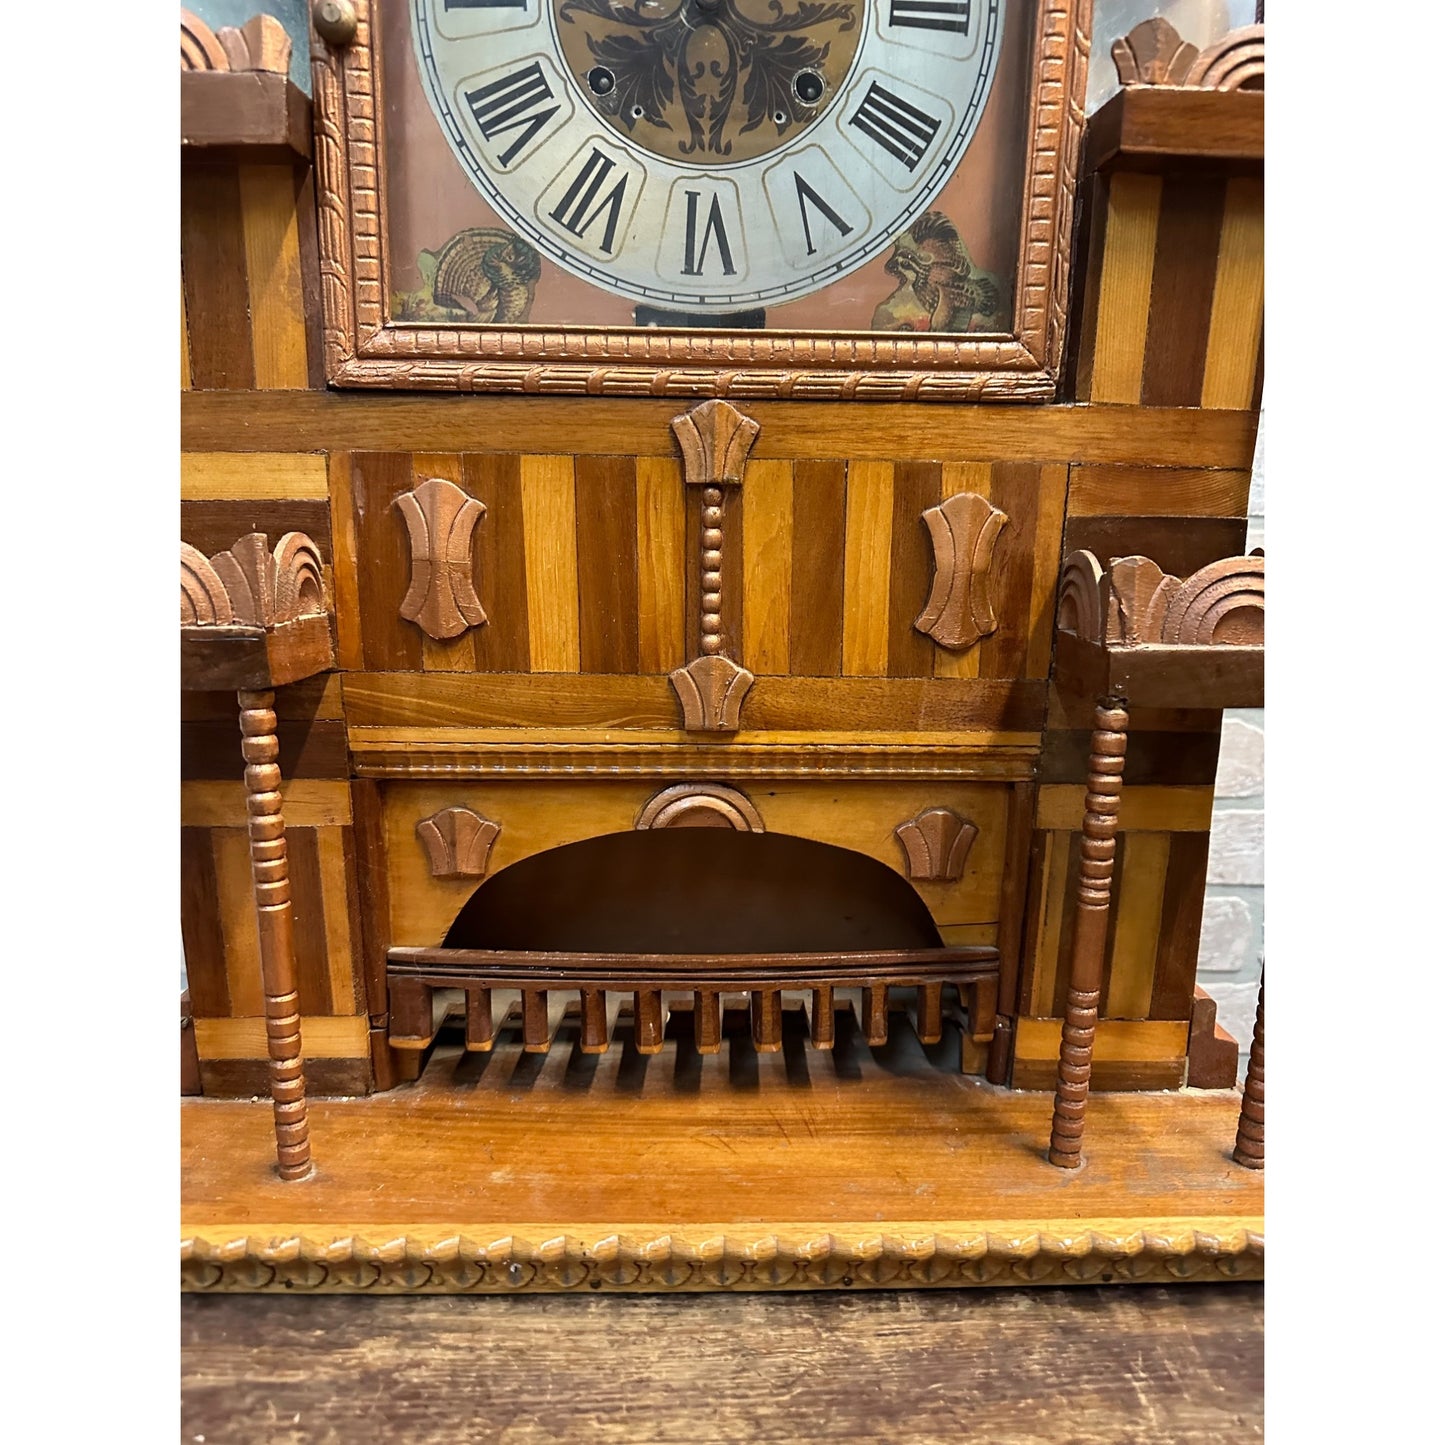 Vintage 1950s Tramp Art / Folk Art Large Ornate Clock w/ Mirrors